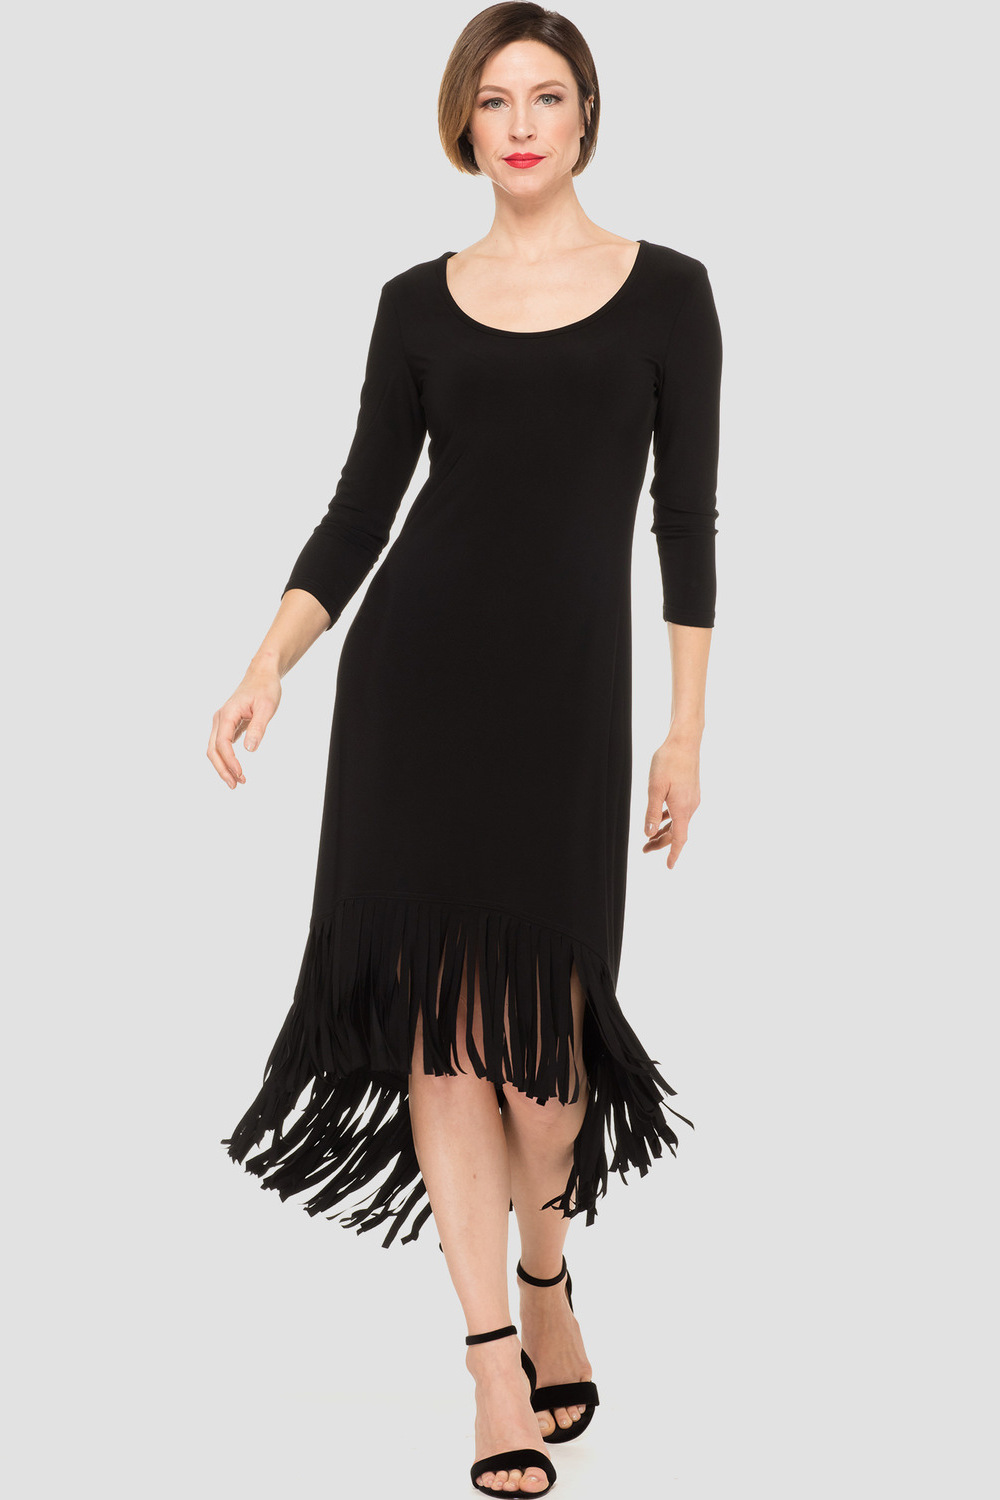 Joseph Ribkoff Dress Style 191008. Black